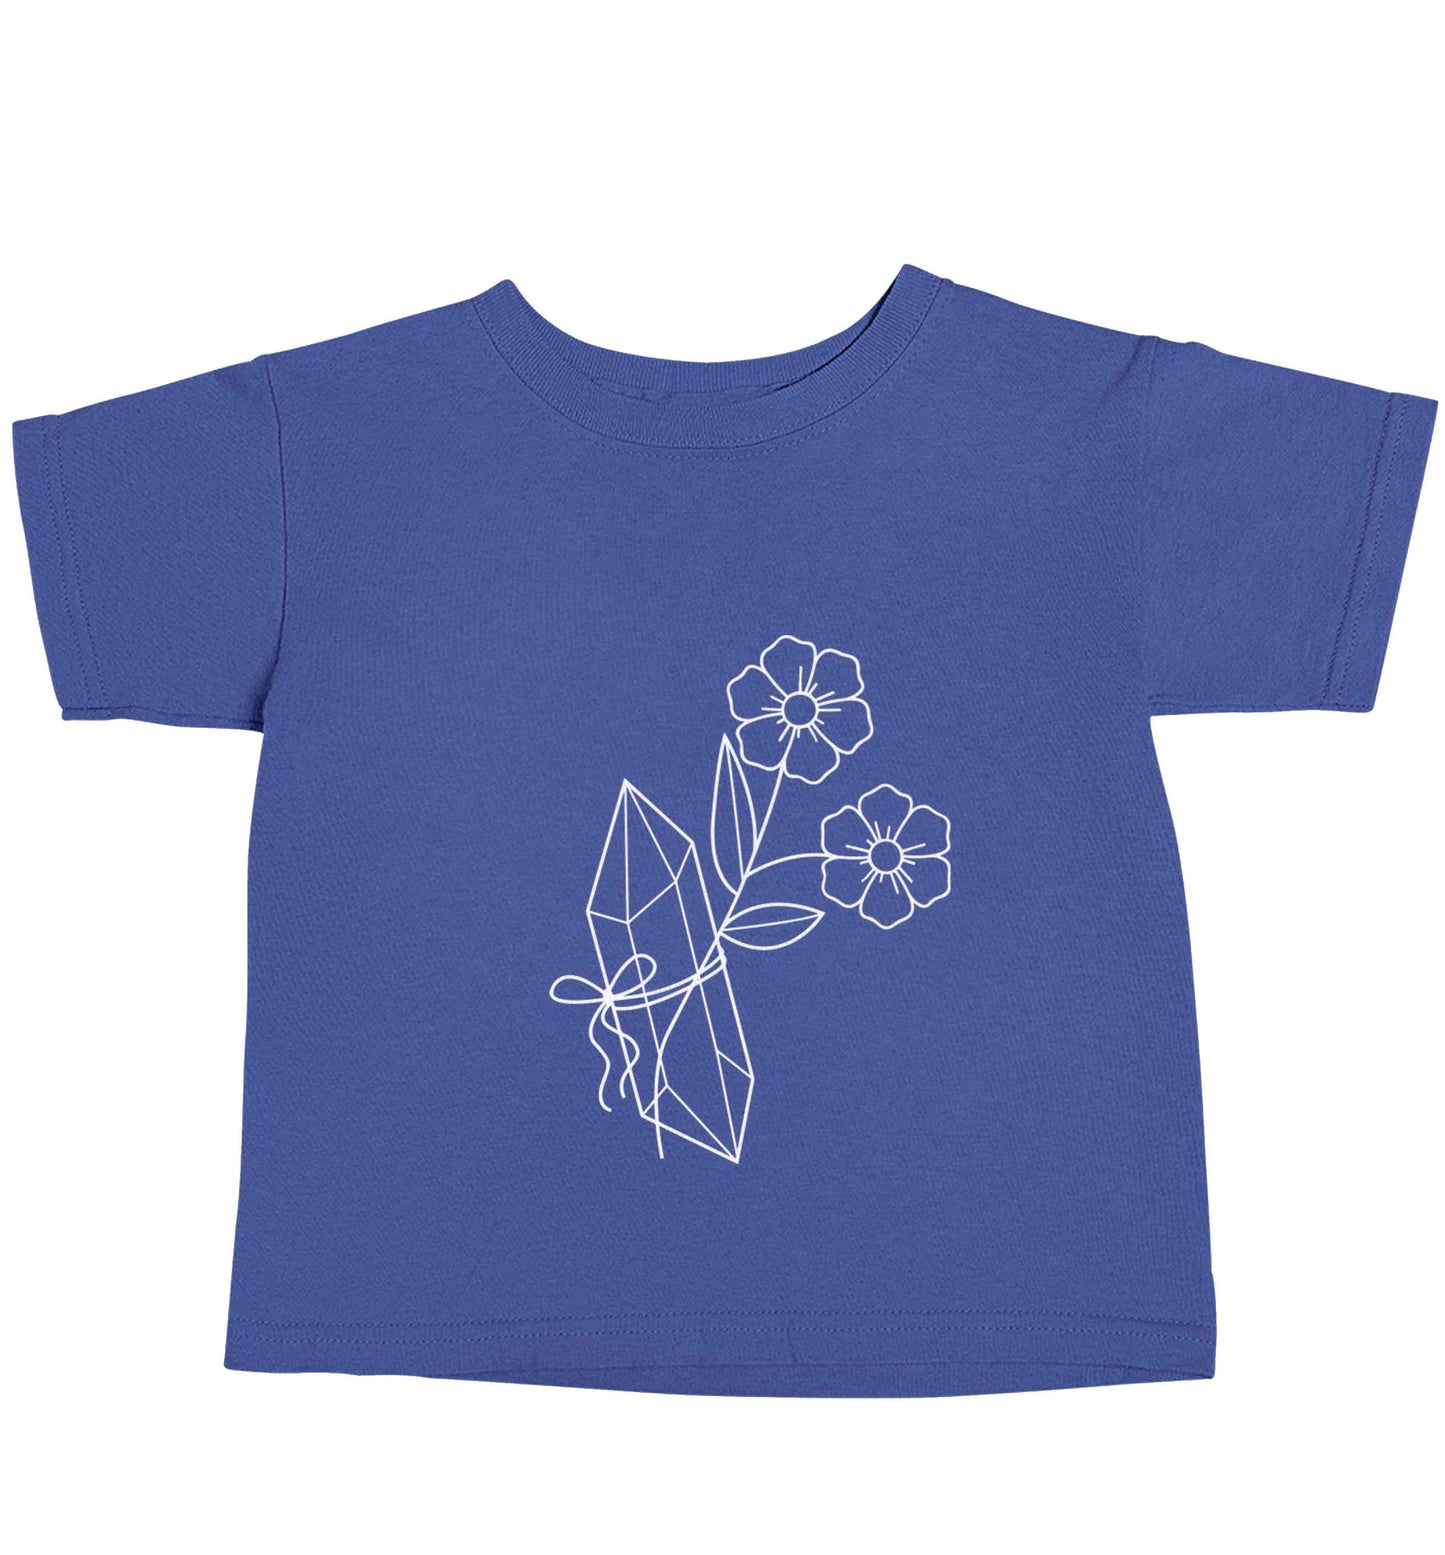 Crystal flower illustration blue baby toddler Tshirt 2 Years